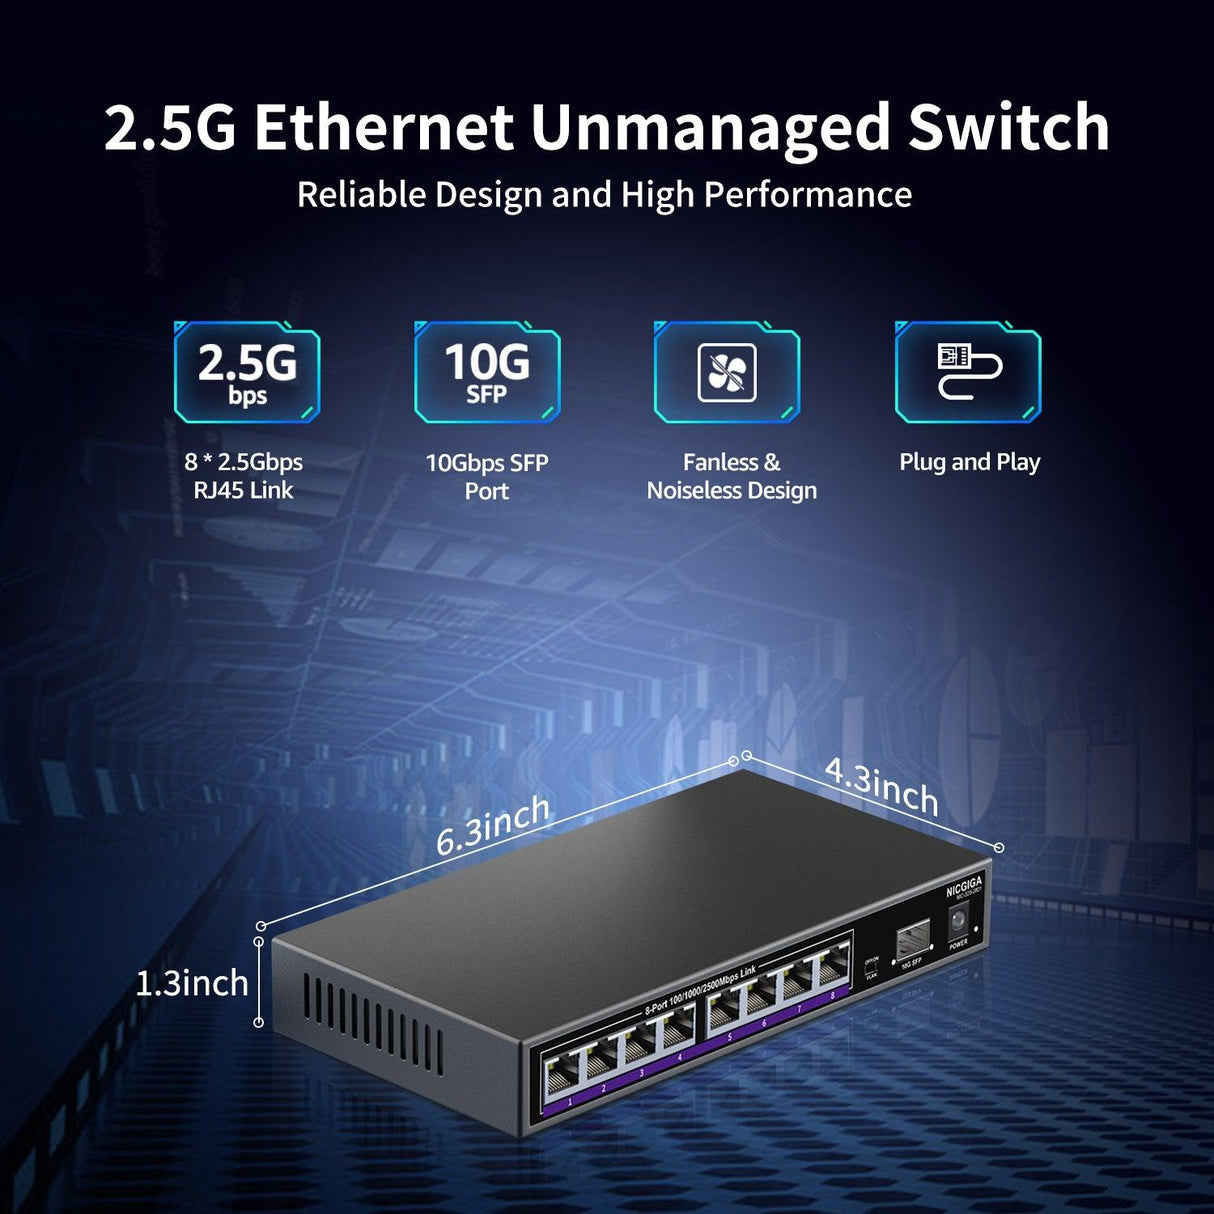 NICGIGA 8 Port 2.5G Ethernet Switch + 10G SFP Uplink, Unmanaged 2.5Gb Network Switch, One-Key VLAN, Plug & Play, Desktop/Wall-Mount, Fanless Metal Design. - NICGIGA